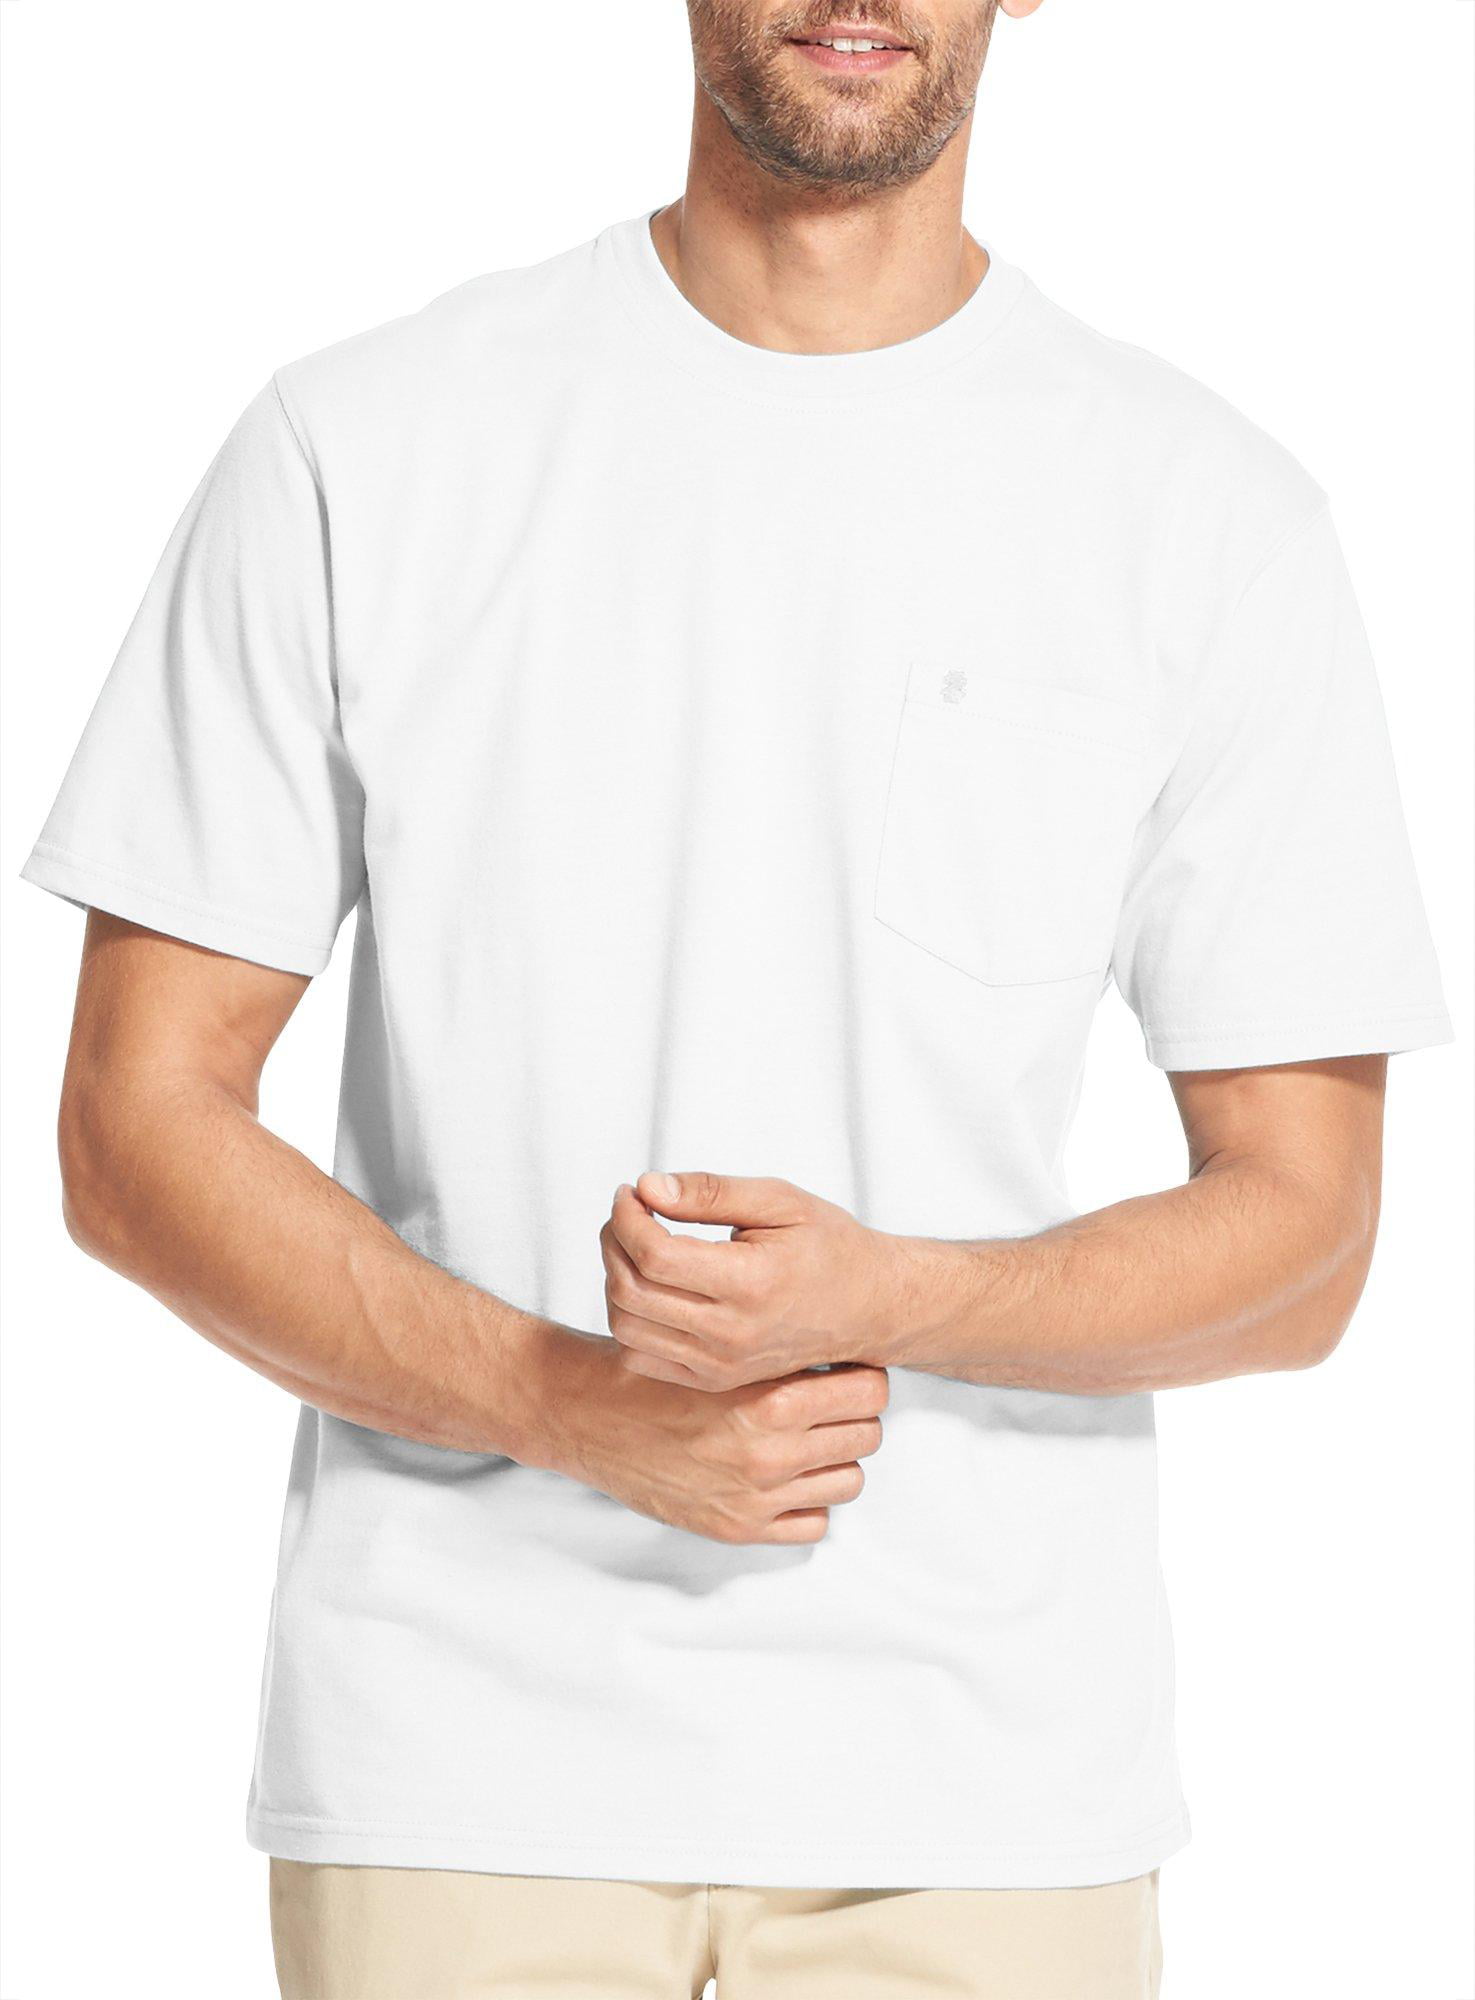 IZOD Mens Saltwater Short Sleeve Solid T-Shirt with Pocket